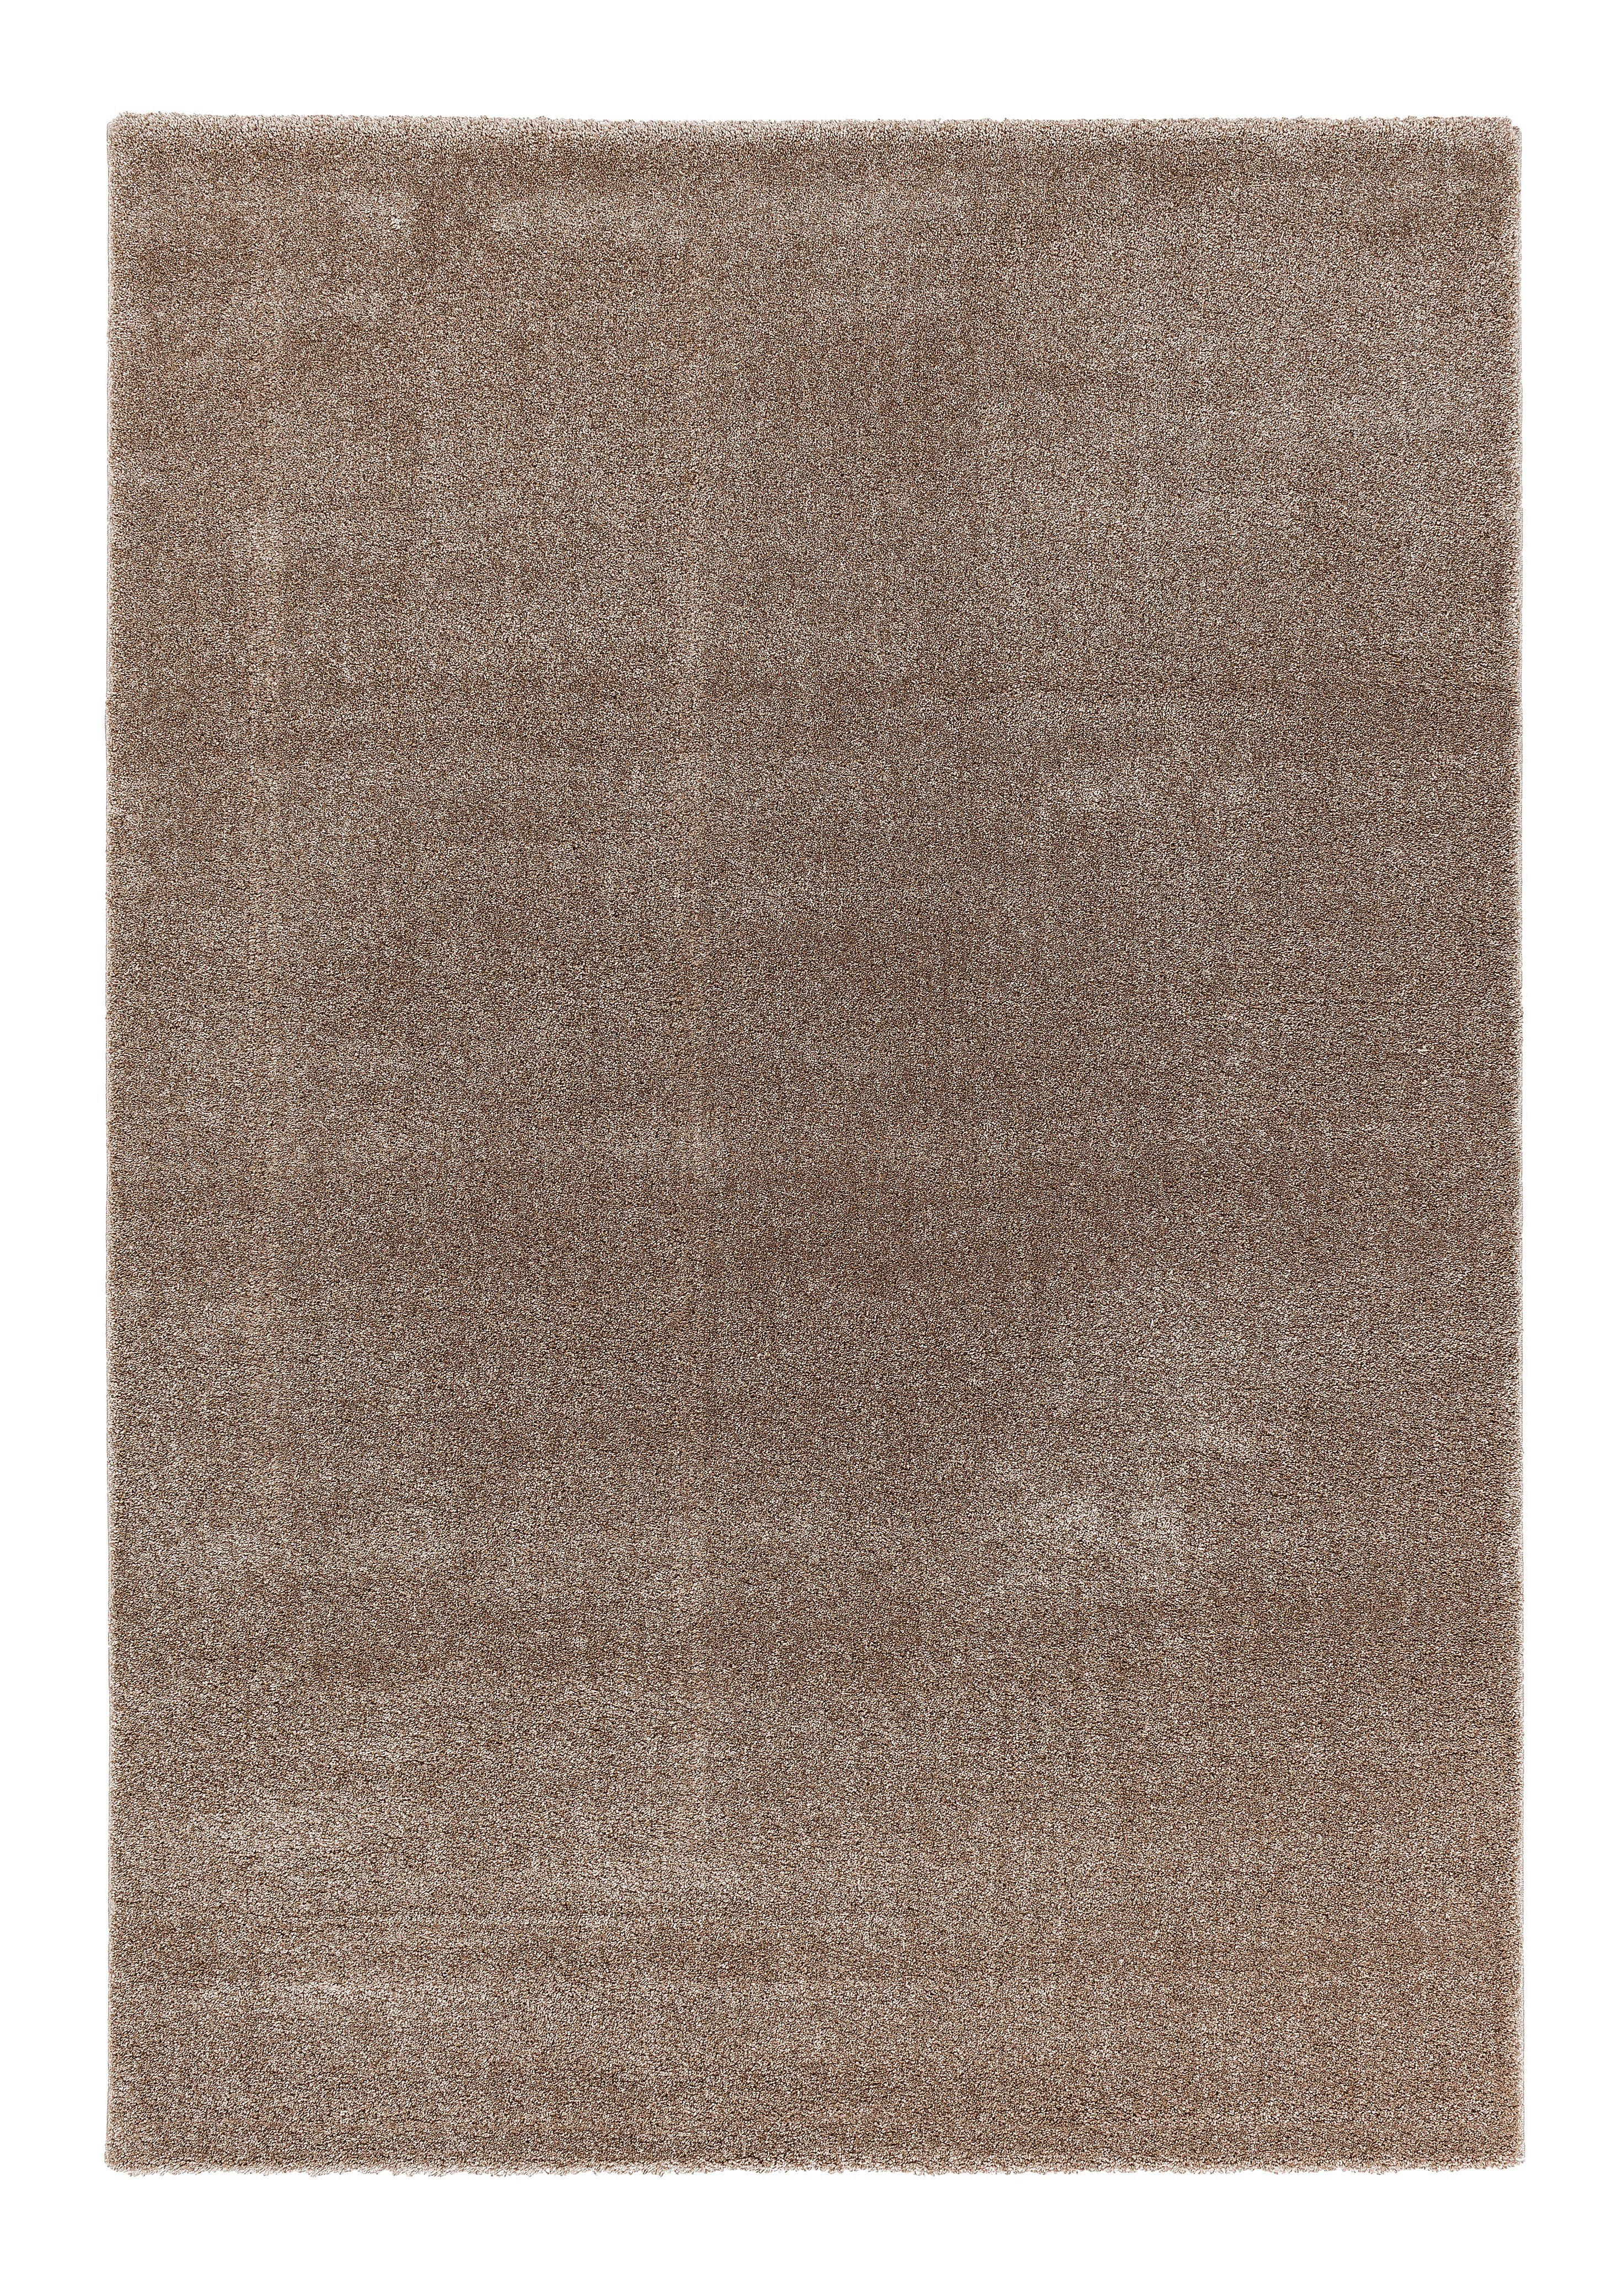 WEBTEPPICH 160/230 cm  - Haselnussfarben, Design, Textil (160/230cm) - Novel